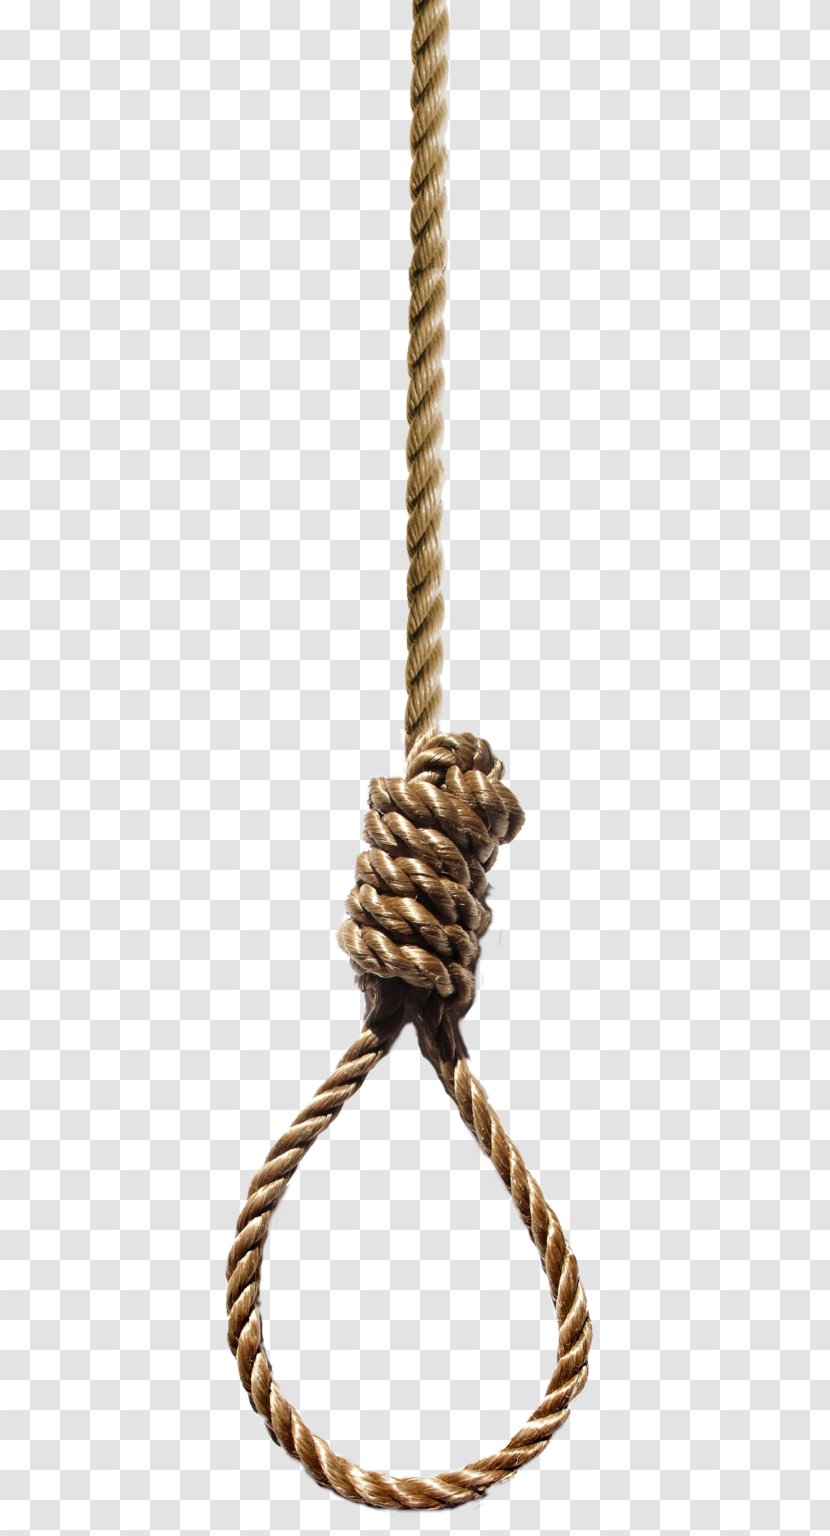 Noose Hangman's Knot Rope Clip Art Transparent PNG